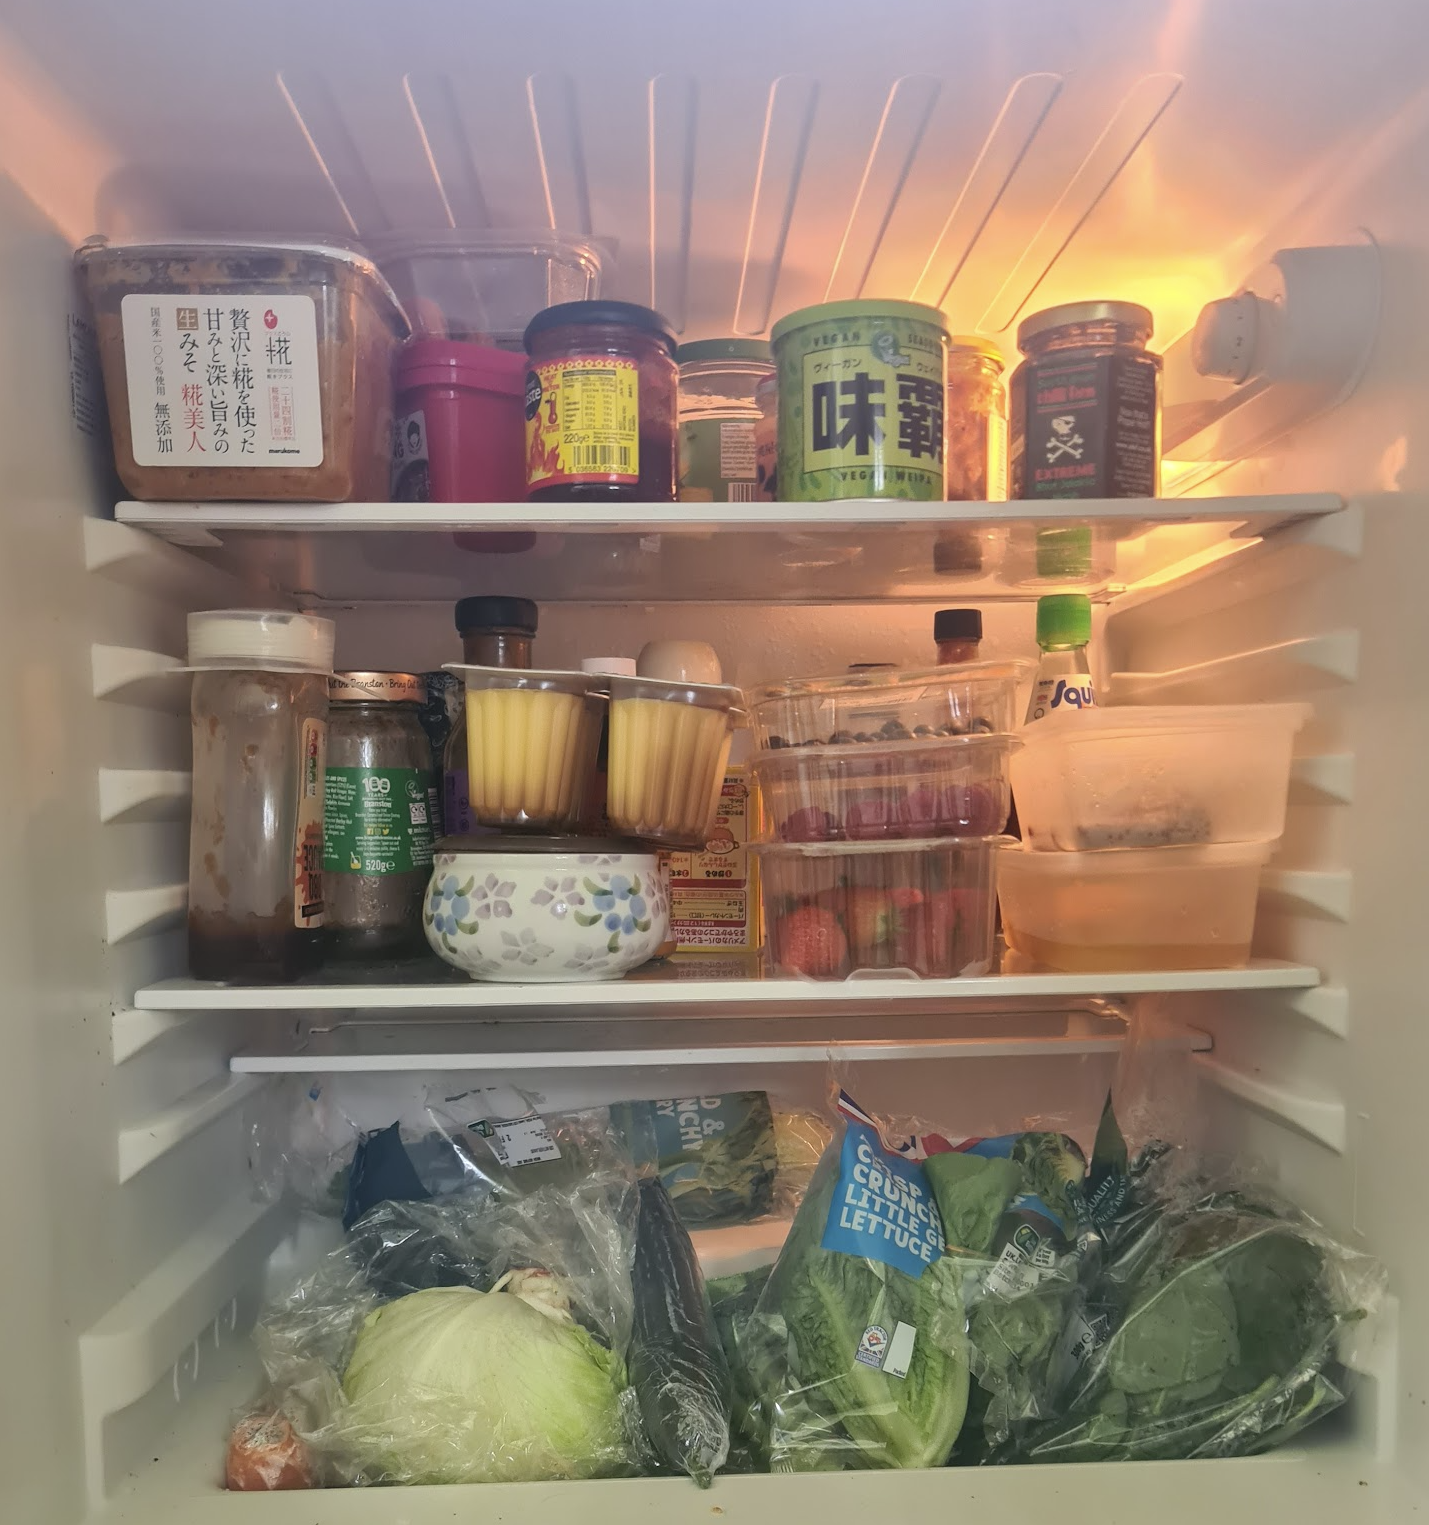 Uninspiring fridge contents